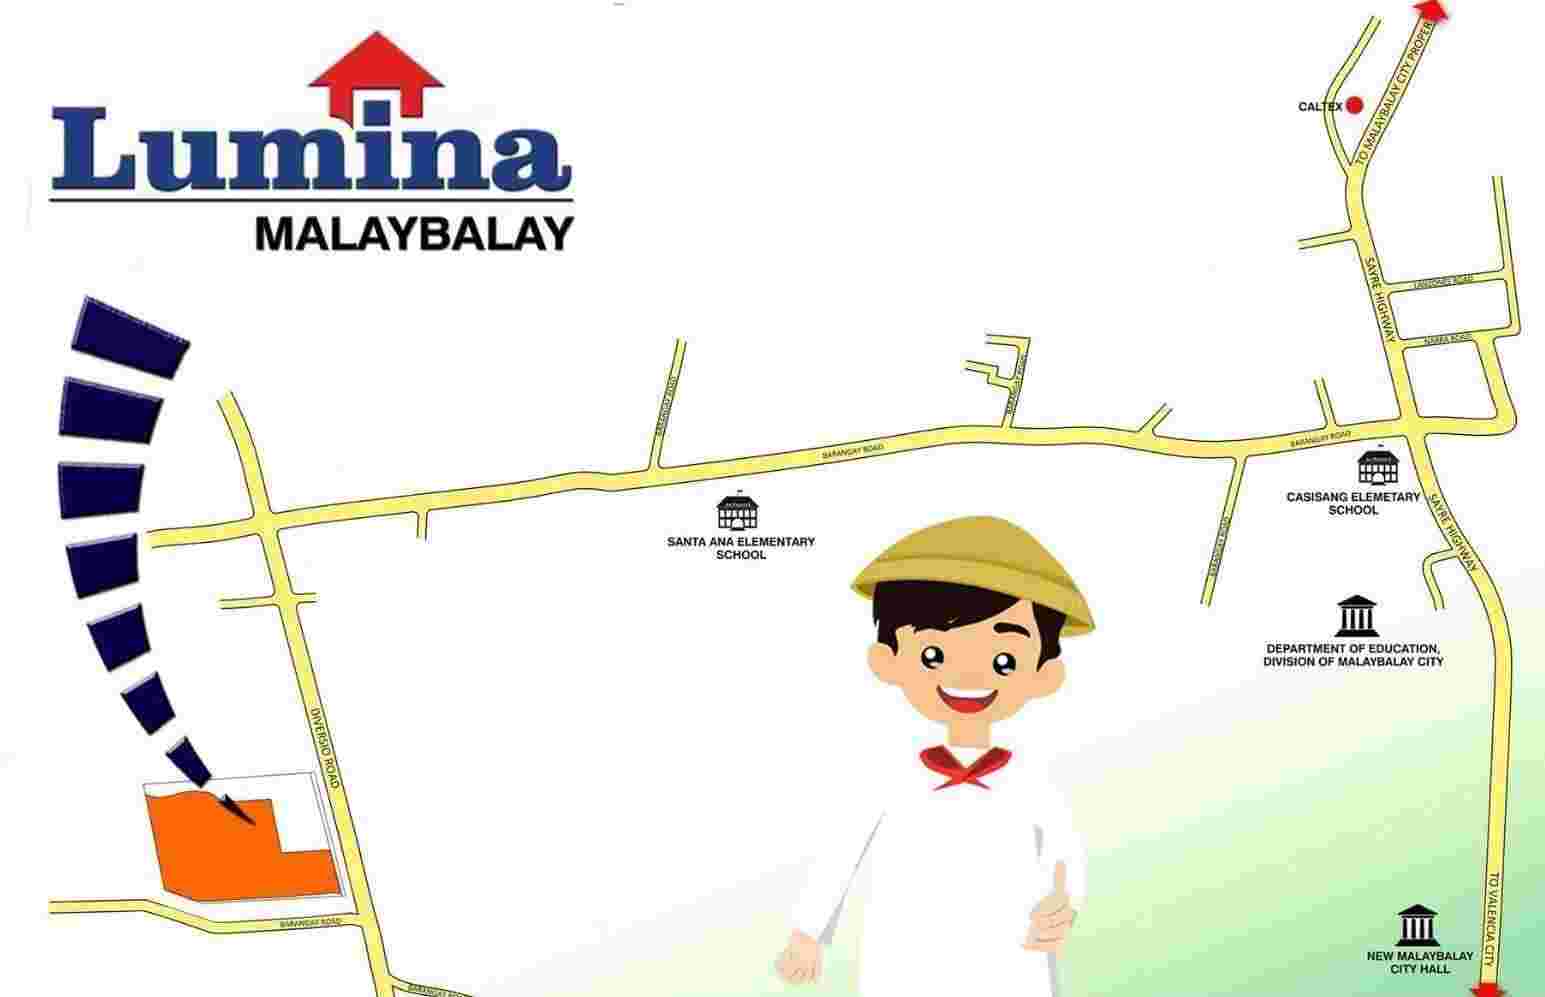 Lumina-Malaybalay-1641797014.jpg